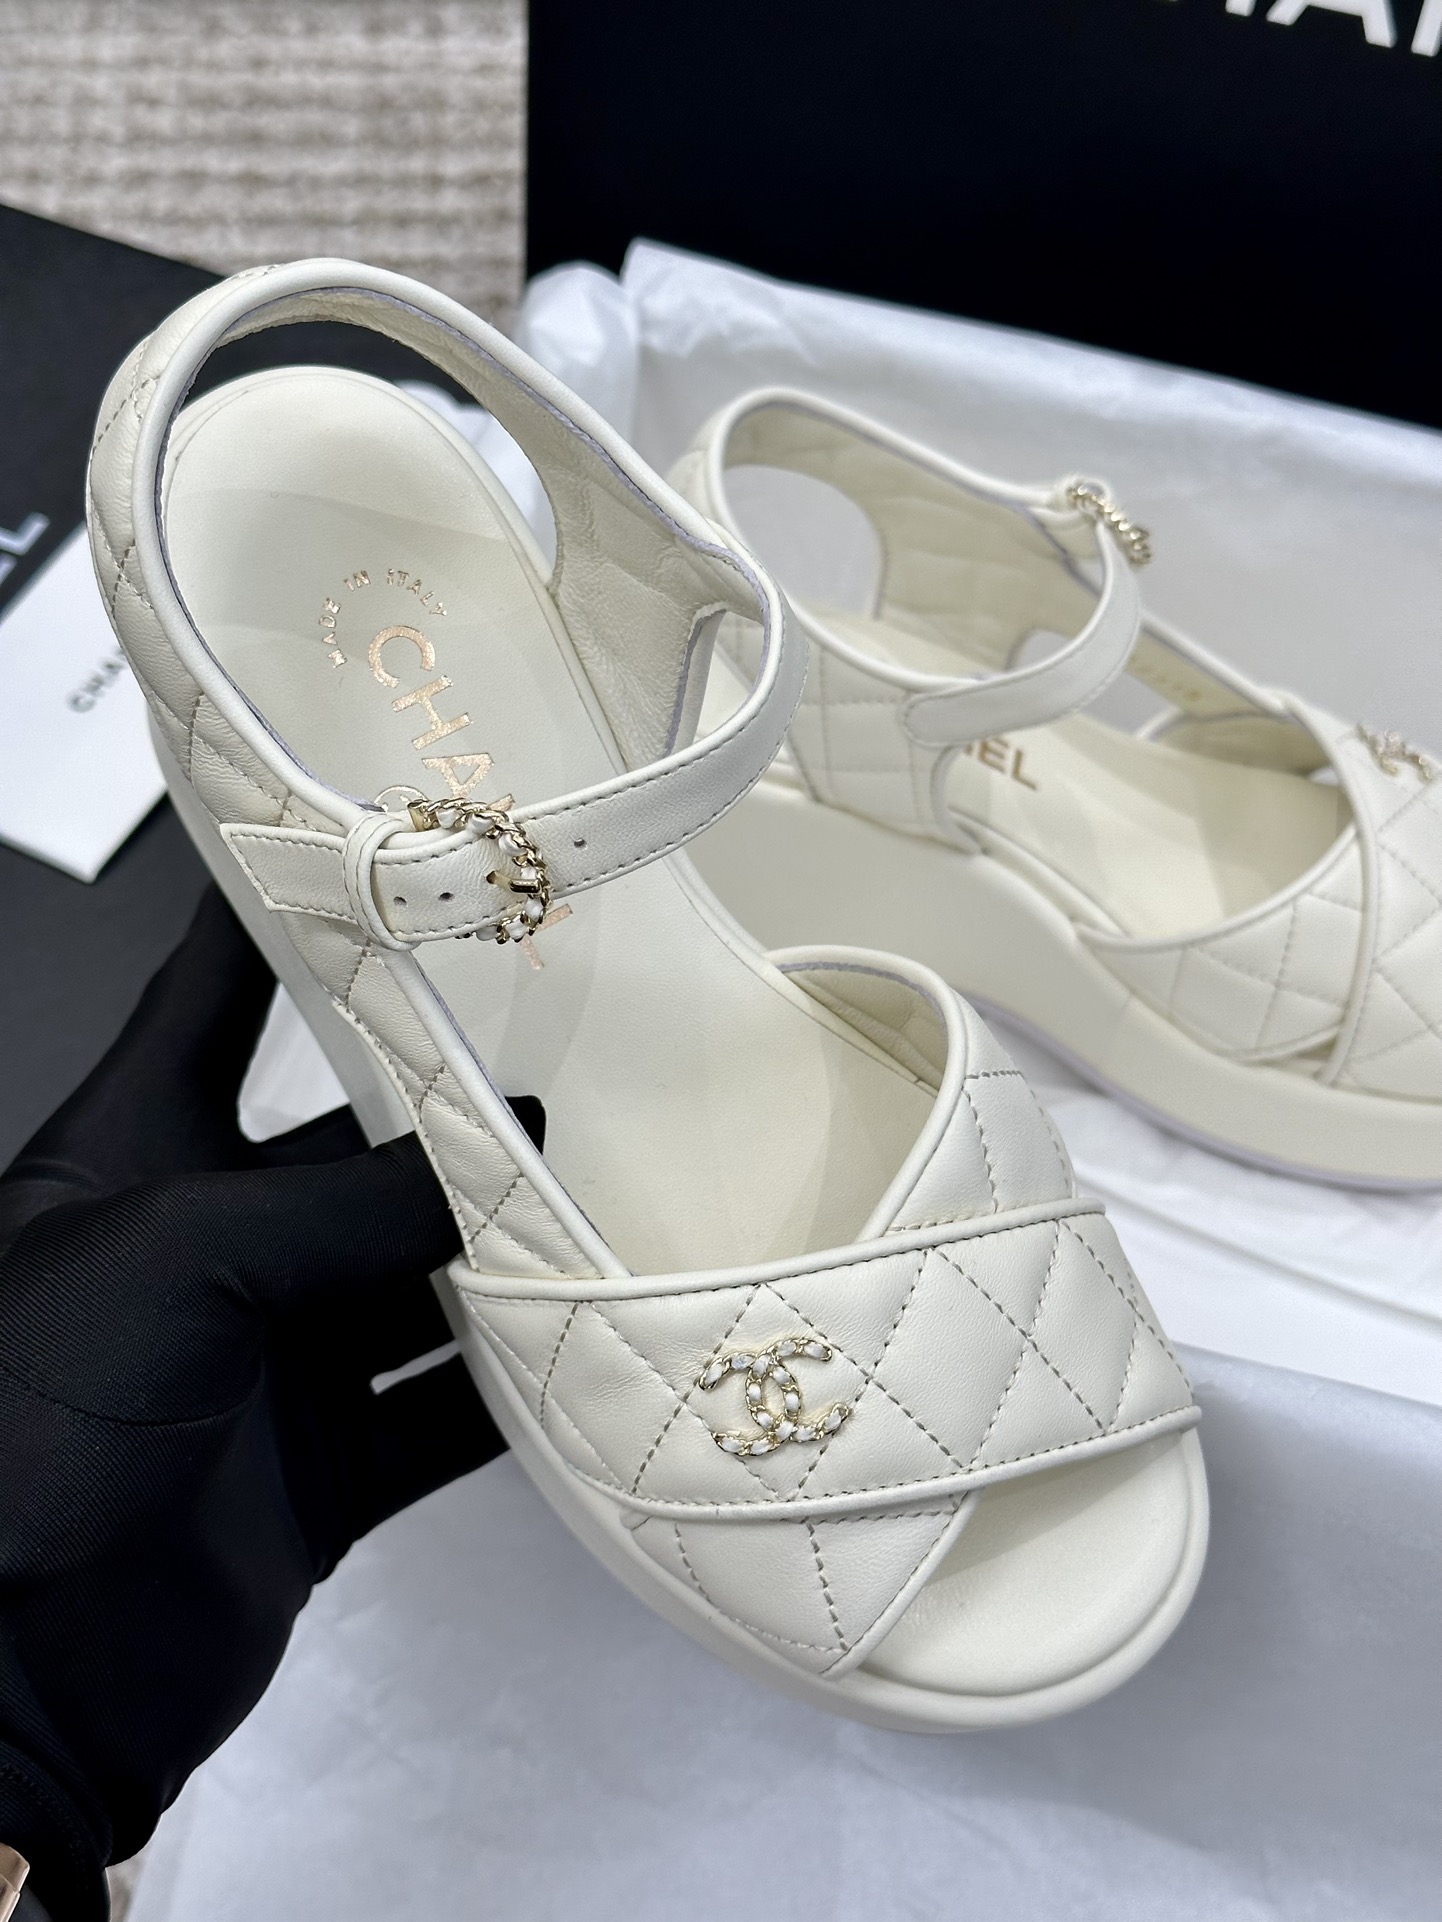 Chanel 23ss new wedge open toe high heel sandals